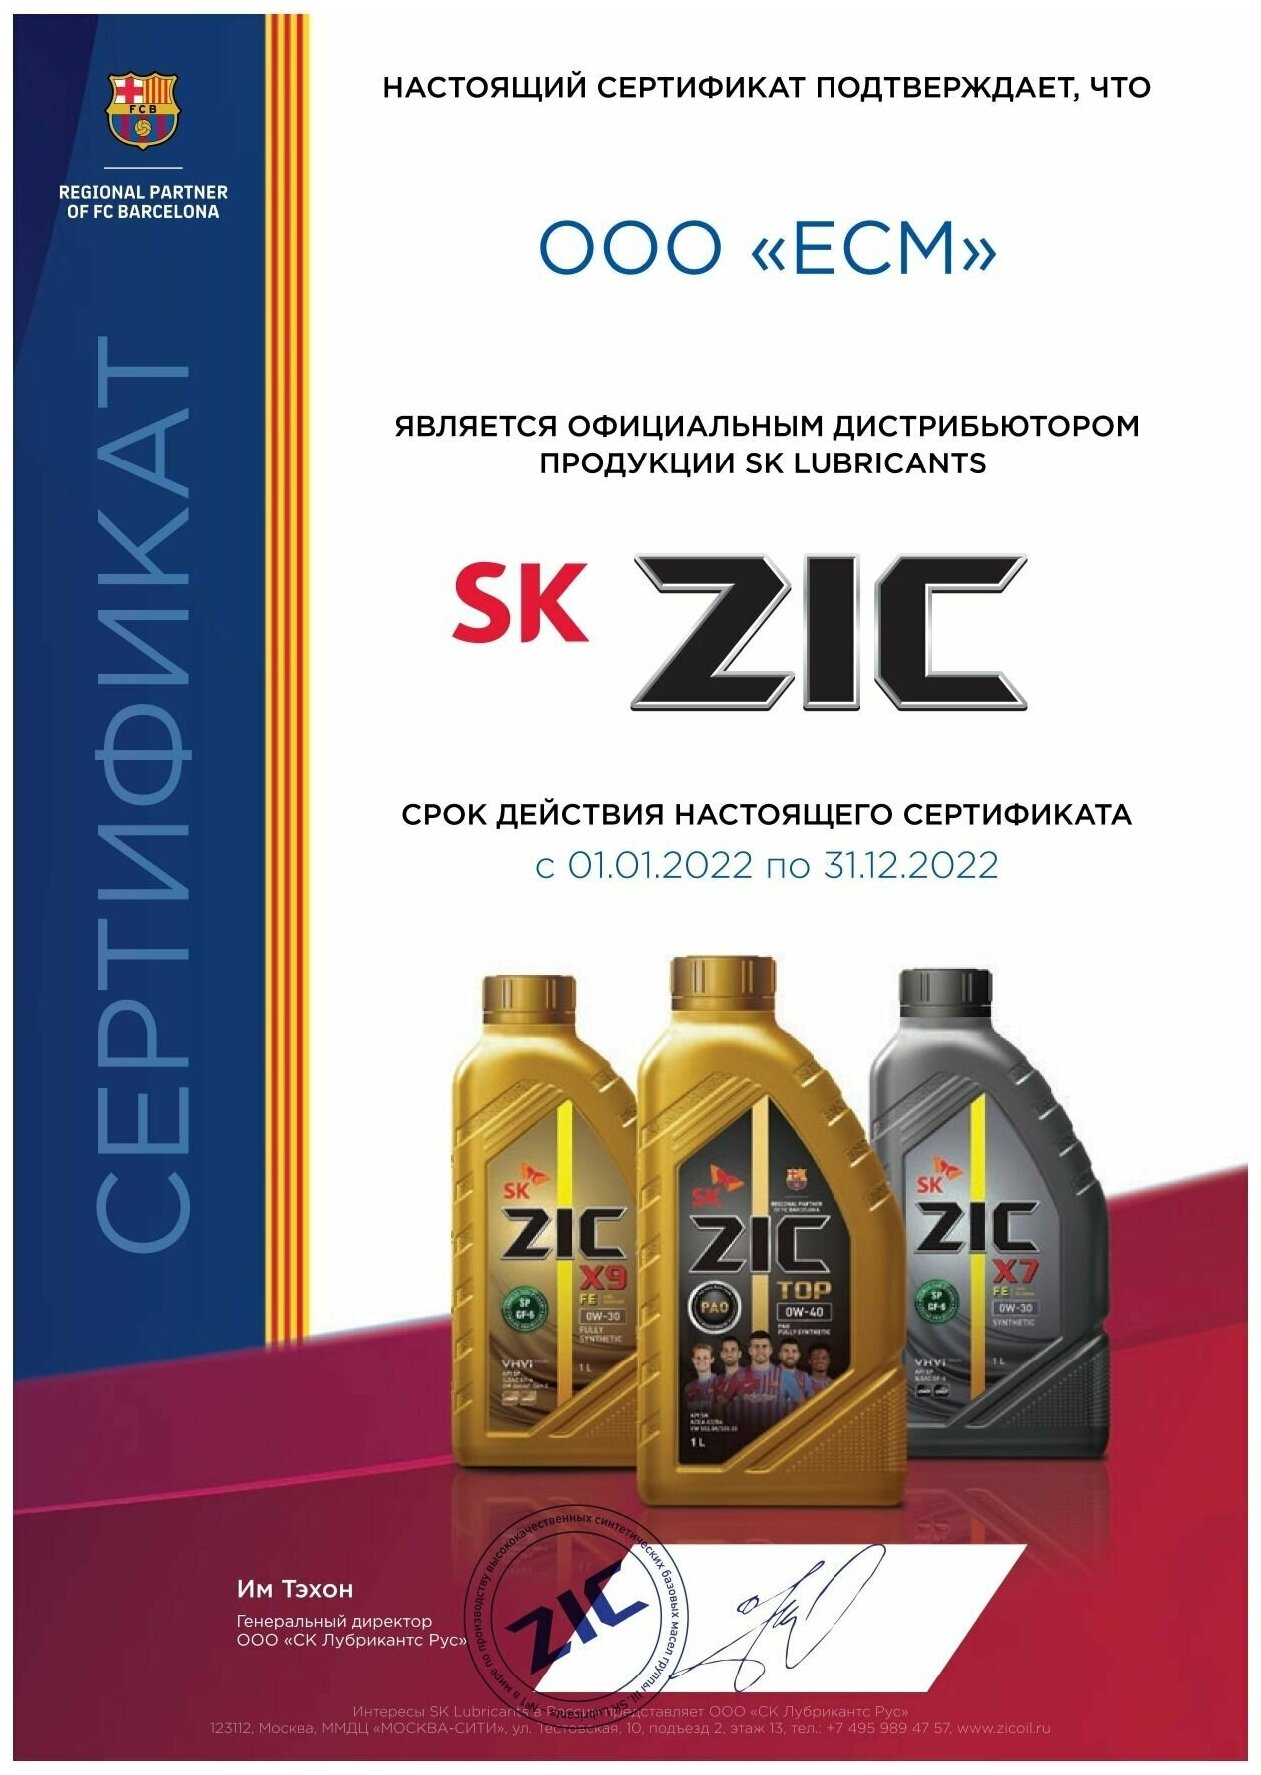 Моторное масло Zic X7 LS 5W-30 синтетическое 4 л